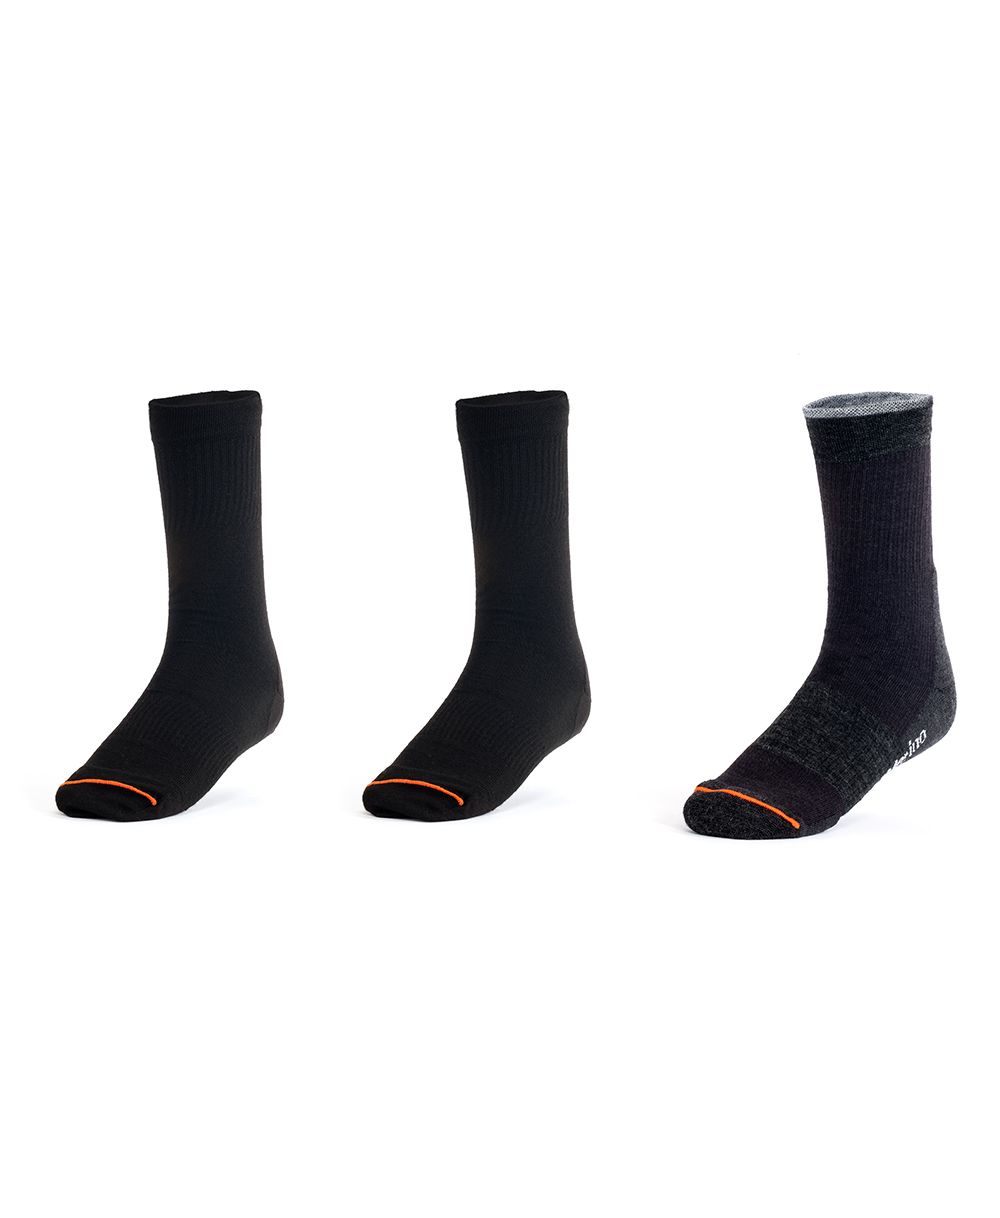 2 x Liner Sock & 1 x Reboot Sock - Set - Geoff Anderson